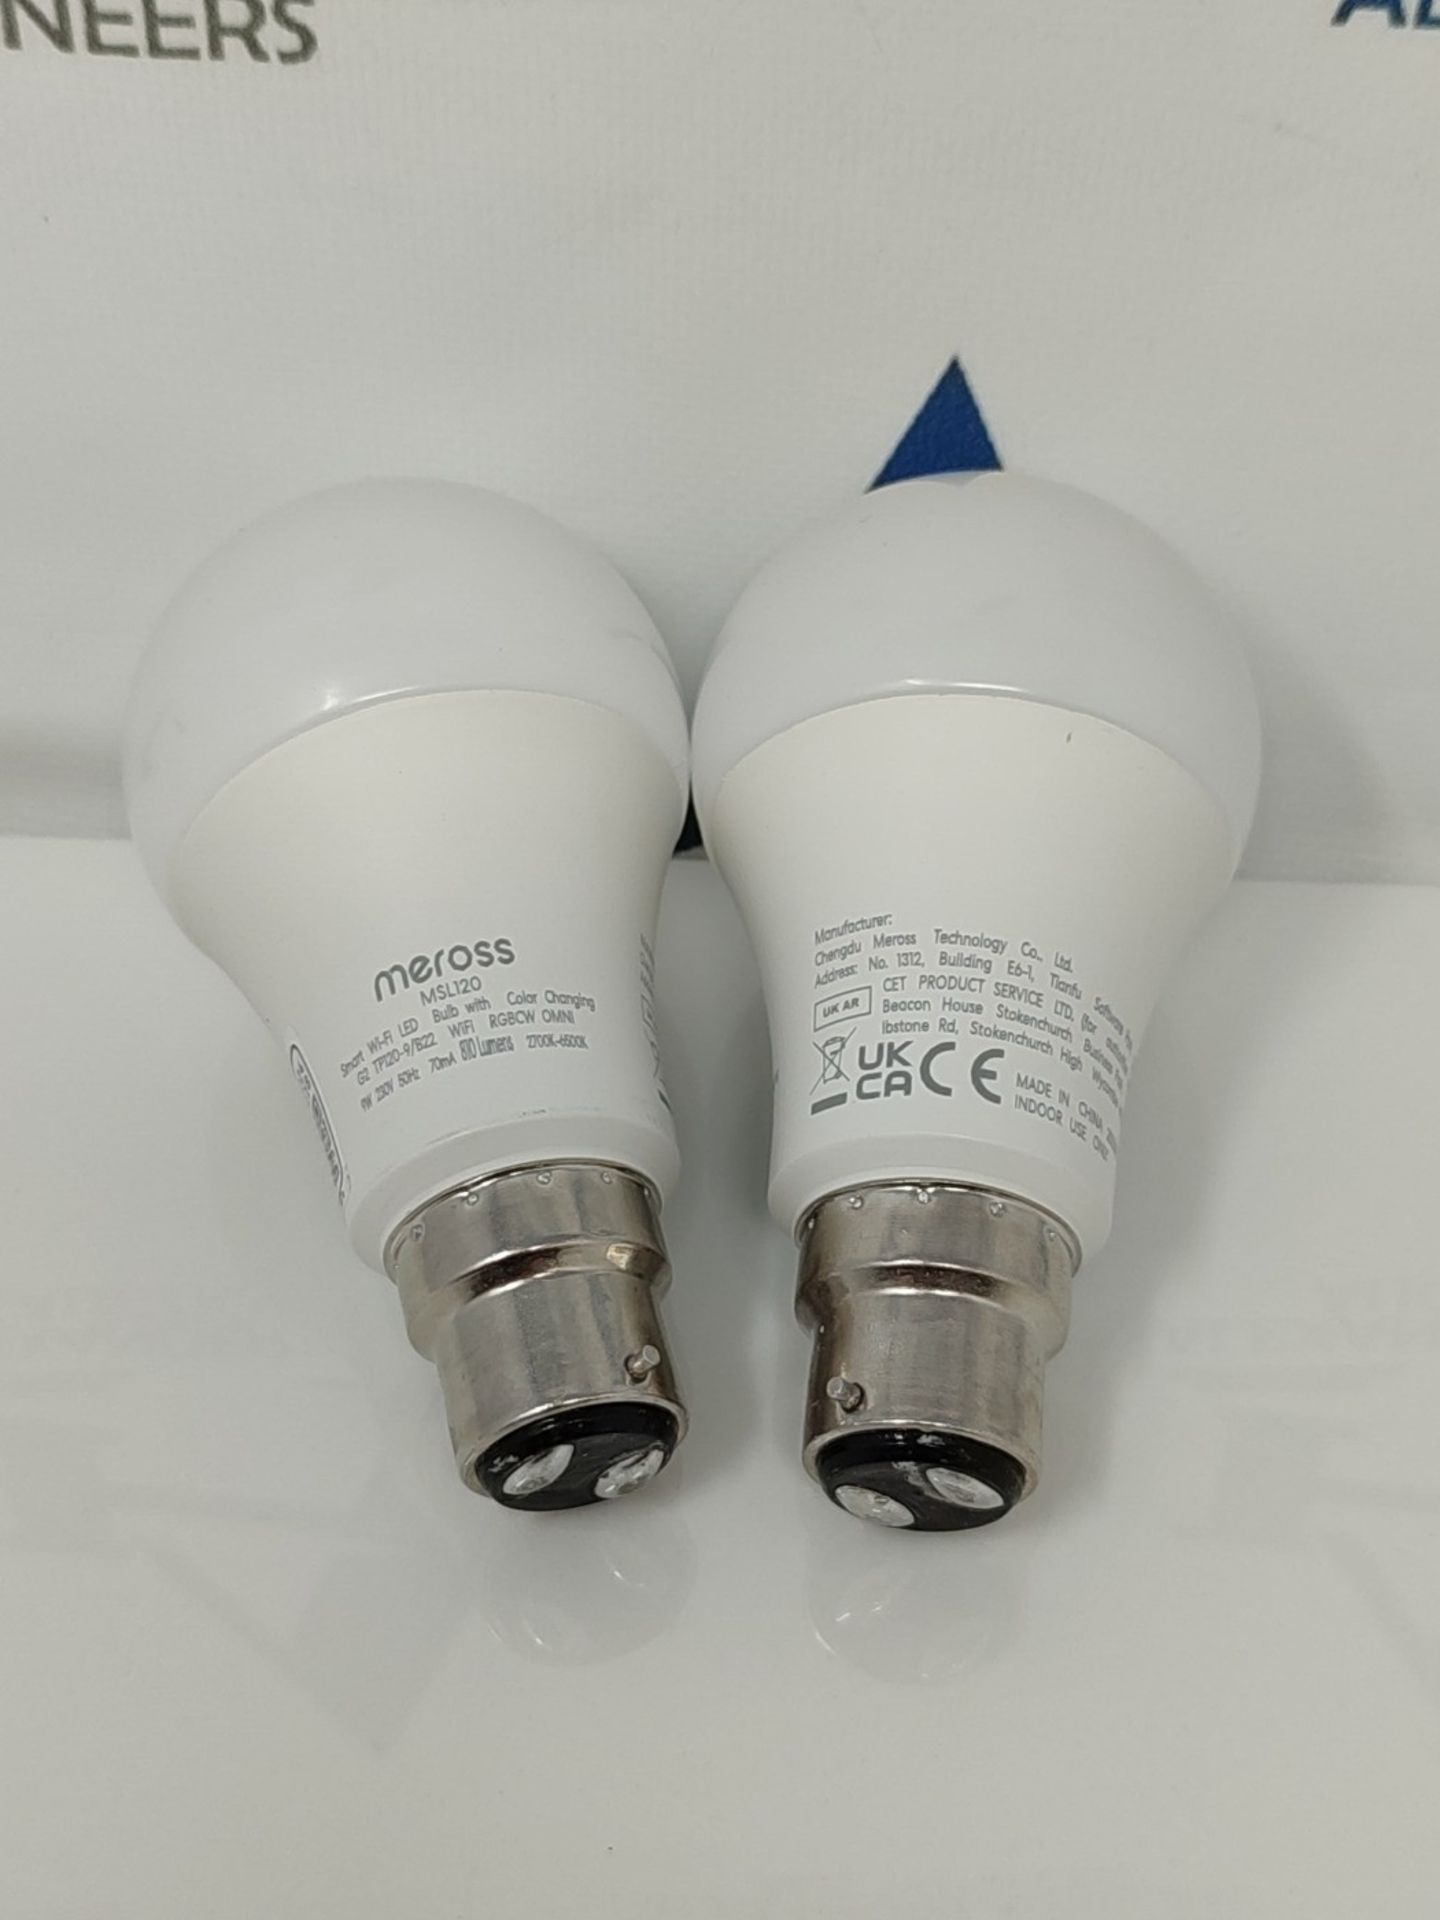 meross Smart Bulb Alexa Light Bulb B22 Works with Apple Homekit, Alexa, Google Home, S - Image 2 of 2